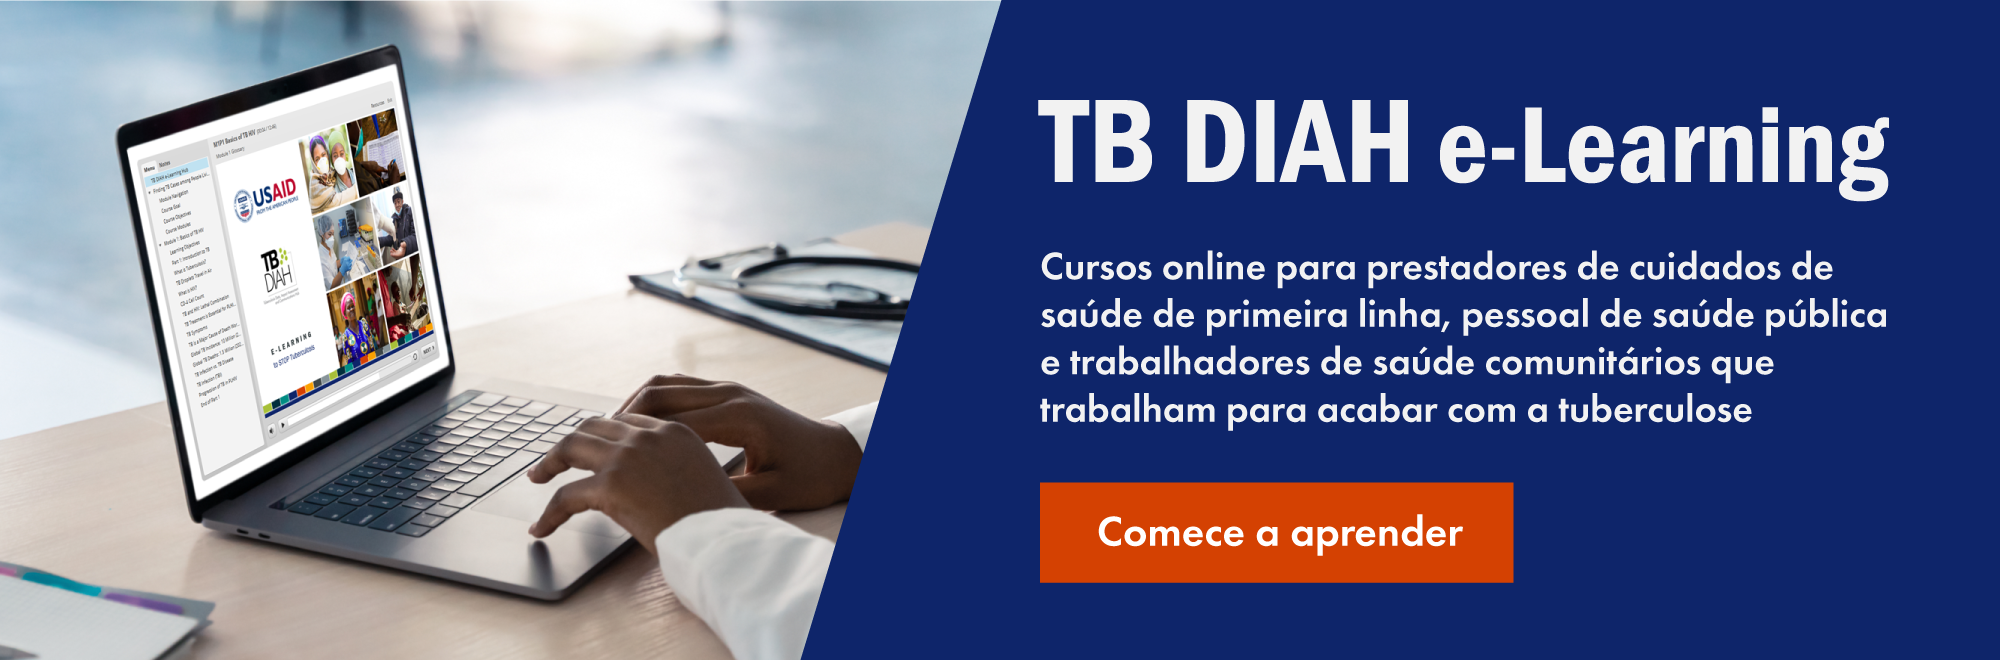 TB DIAH e-learning: Cursos online para profissionais de saúde da linha de frente, equipe de saúde pública e agentes  comuni